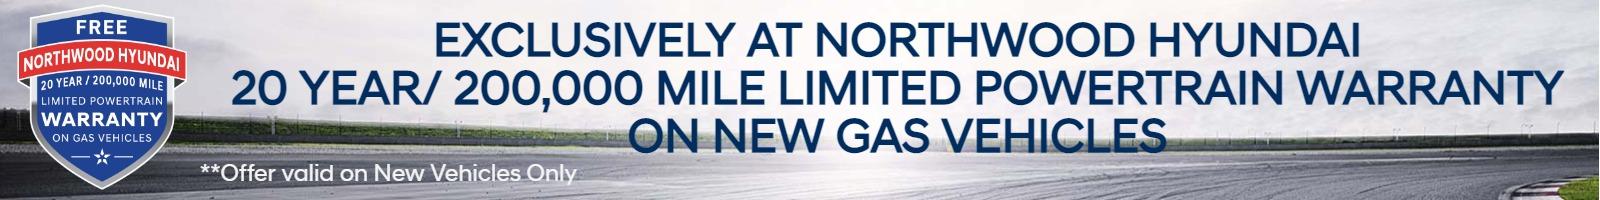 Northwood Hyundai 20 Year/ 200,000 Mile Limited Powertrain Warranty on Gas Vehicles